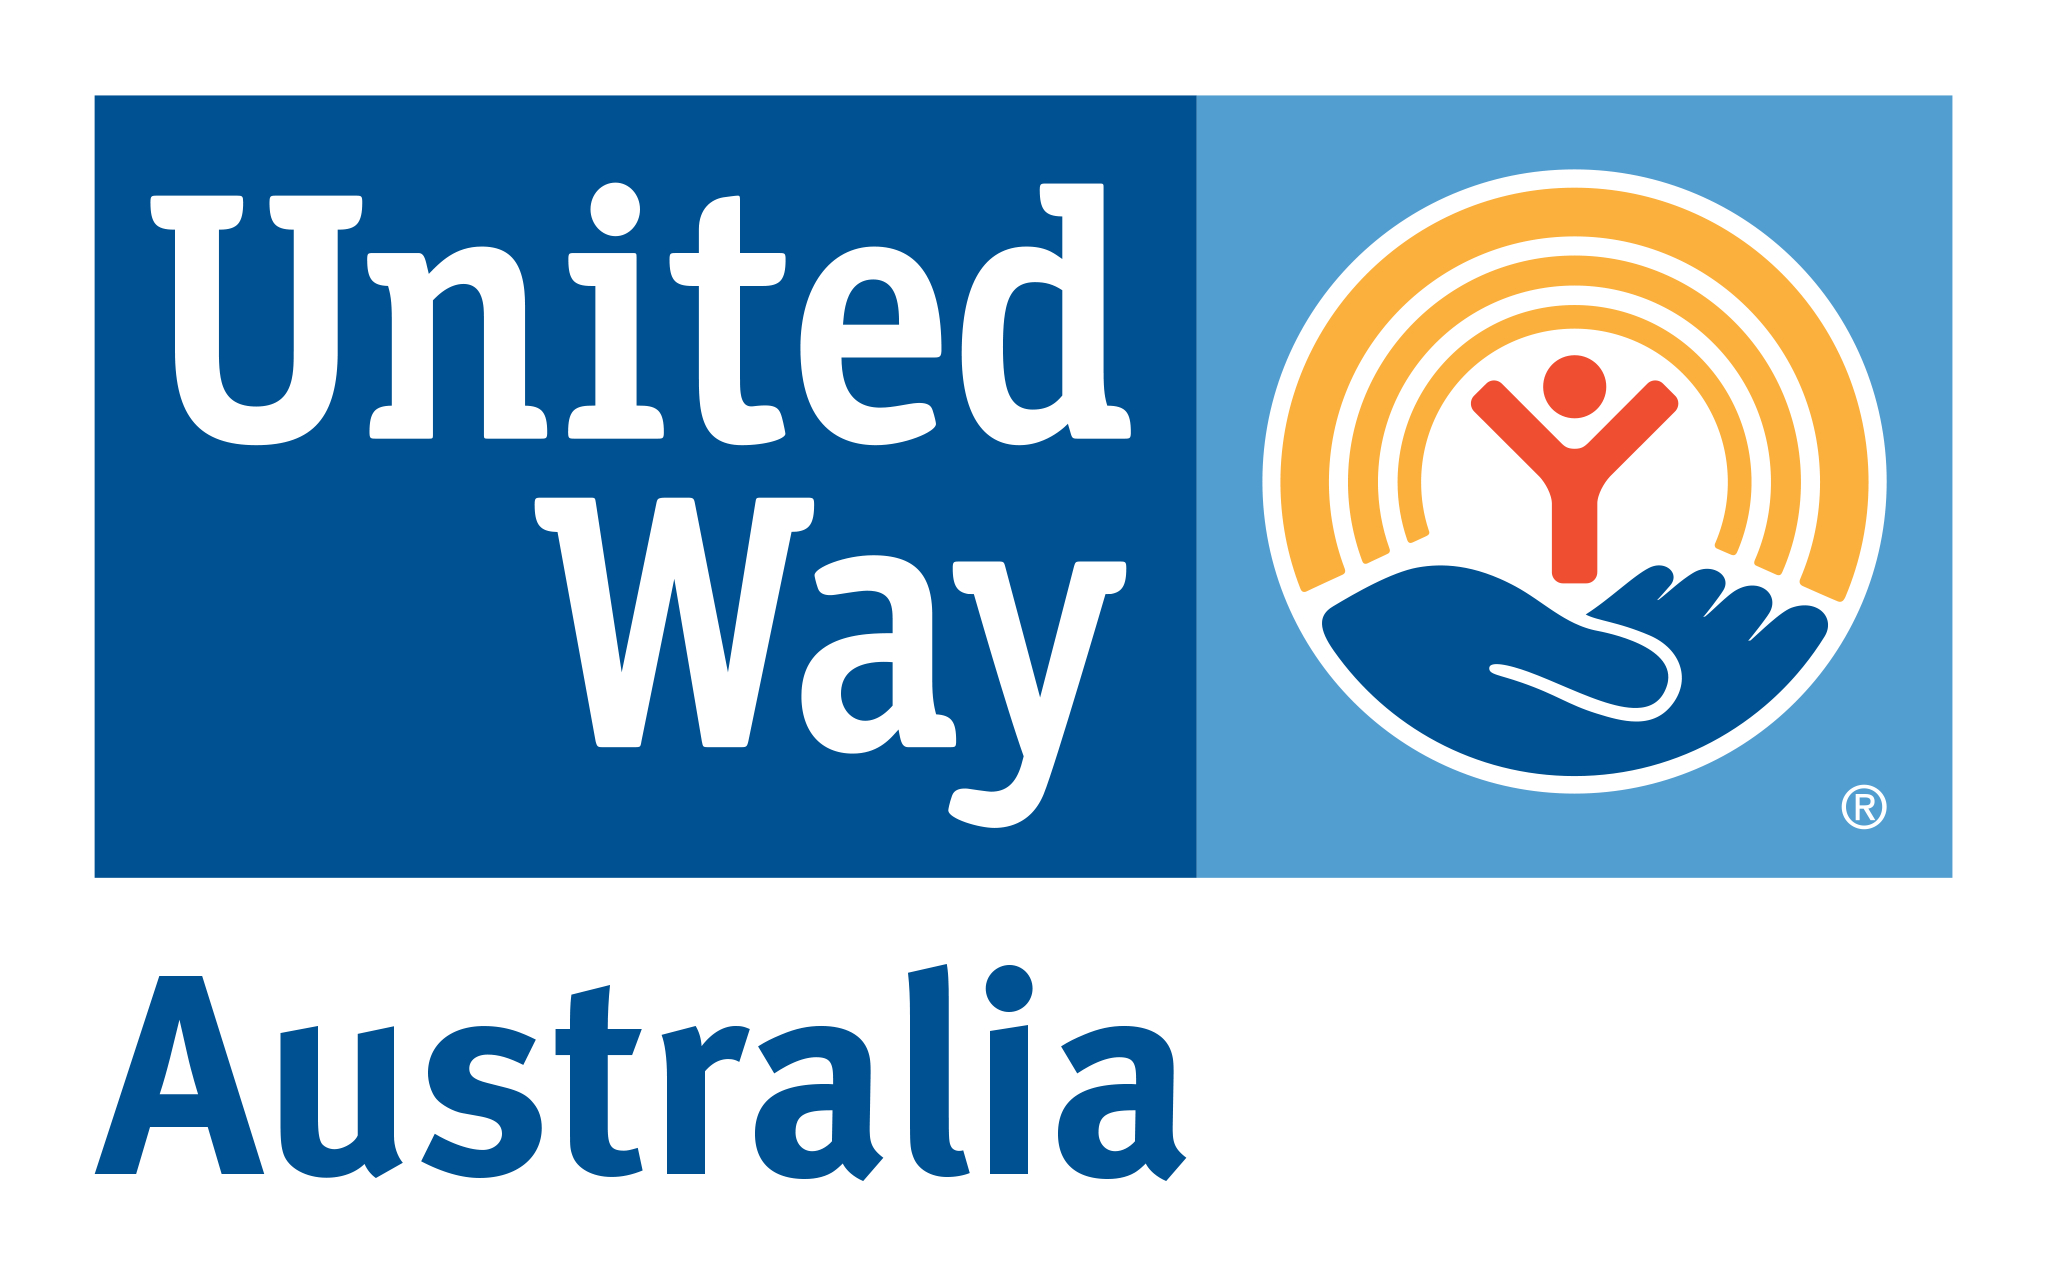 United Way Australia